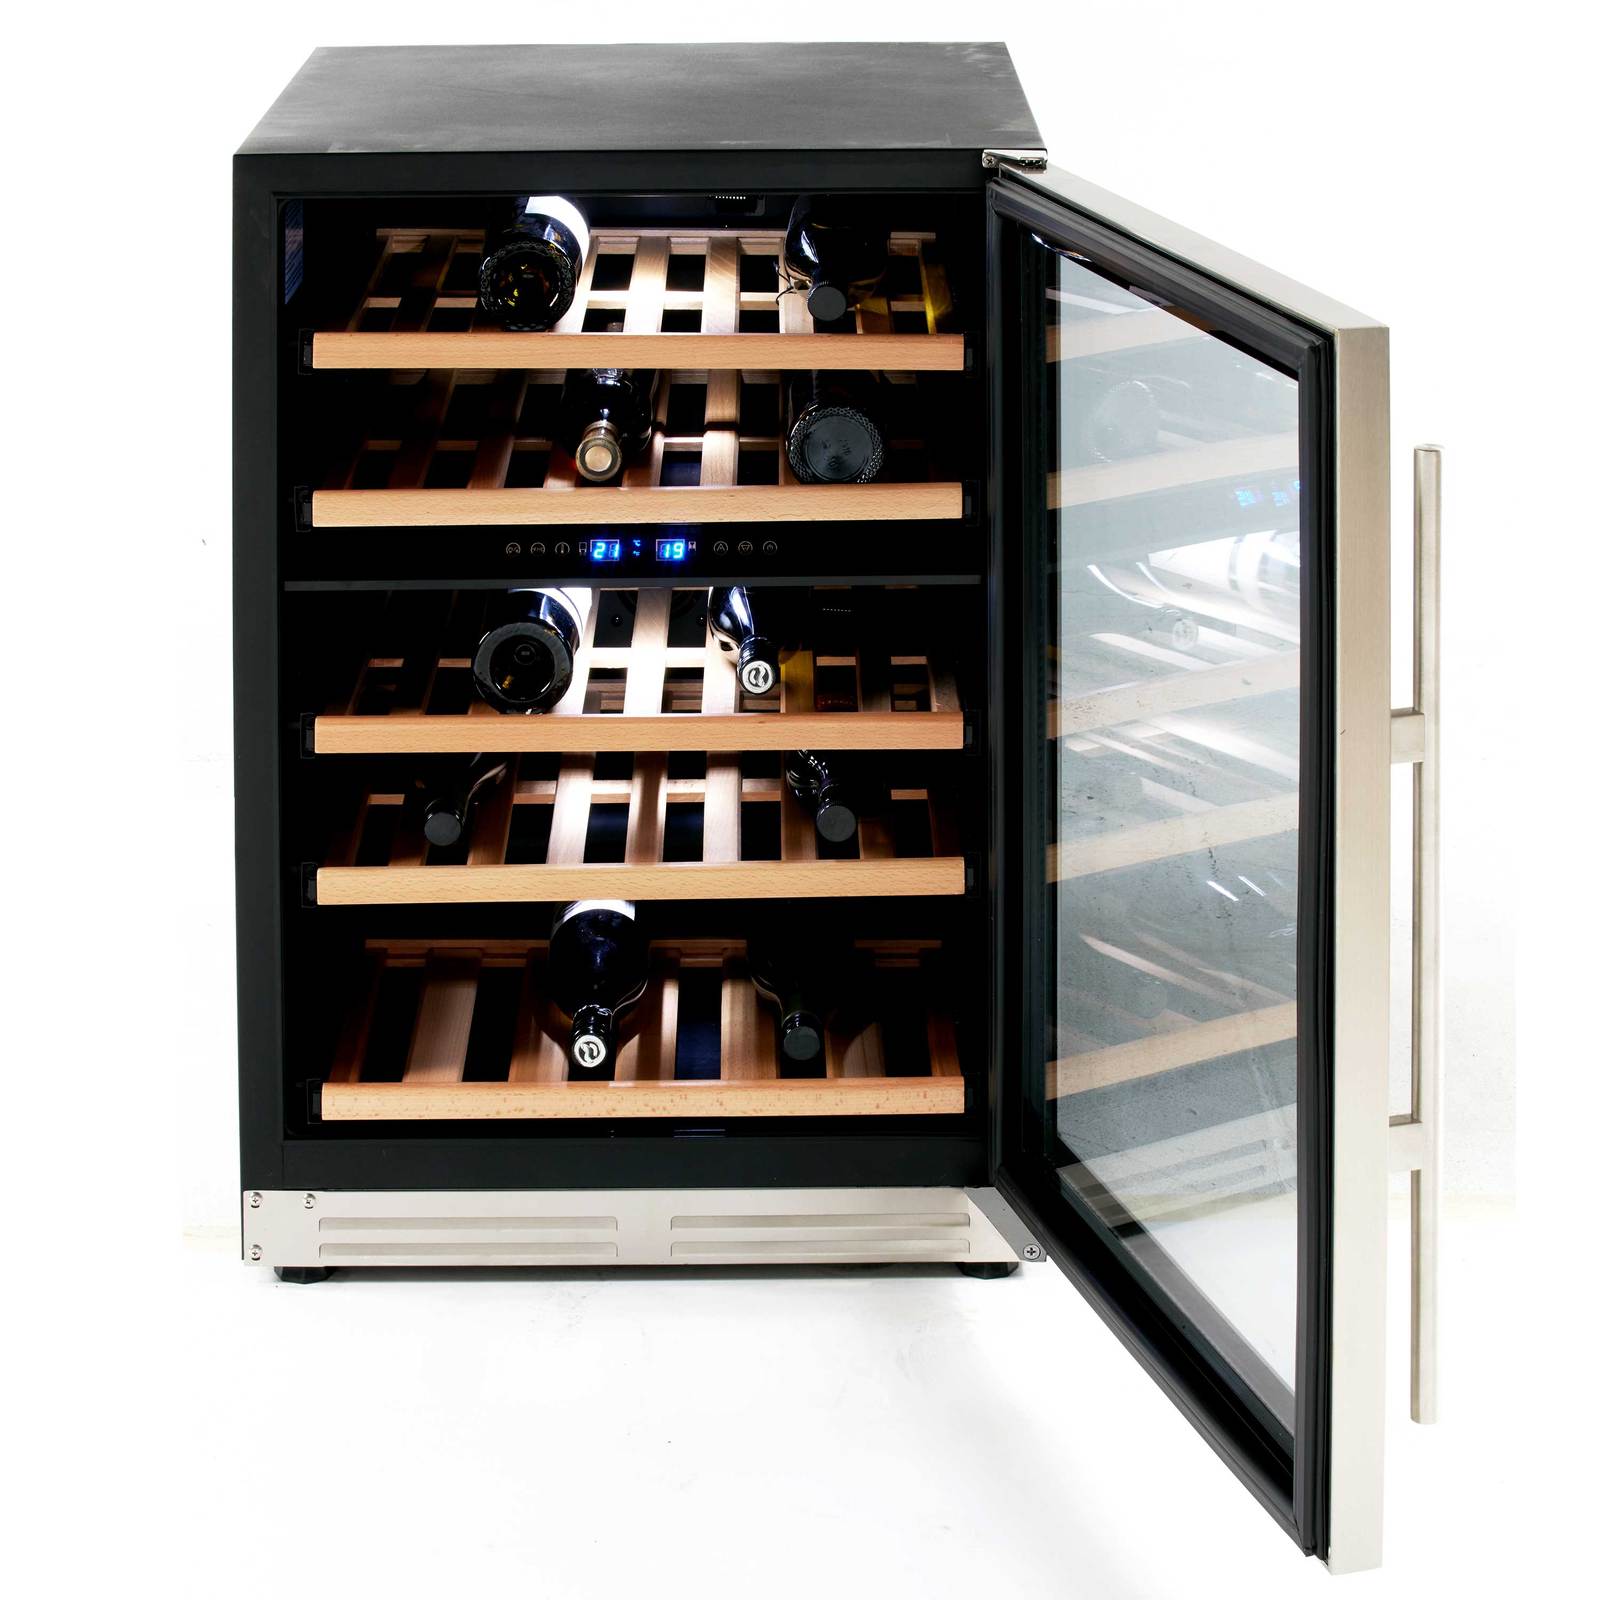 Avanti 43 Bottle DESIGNER Series Dual-Zone Wine Cooler - Stainless Steel with Black Cabinet / 43 Bottles